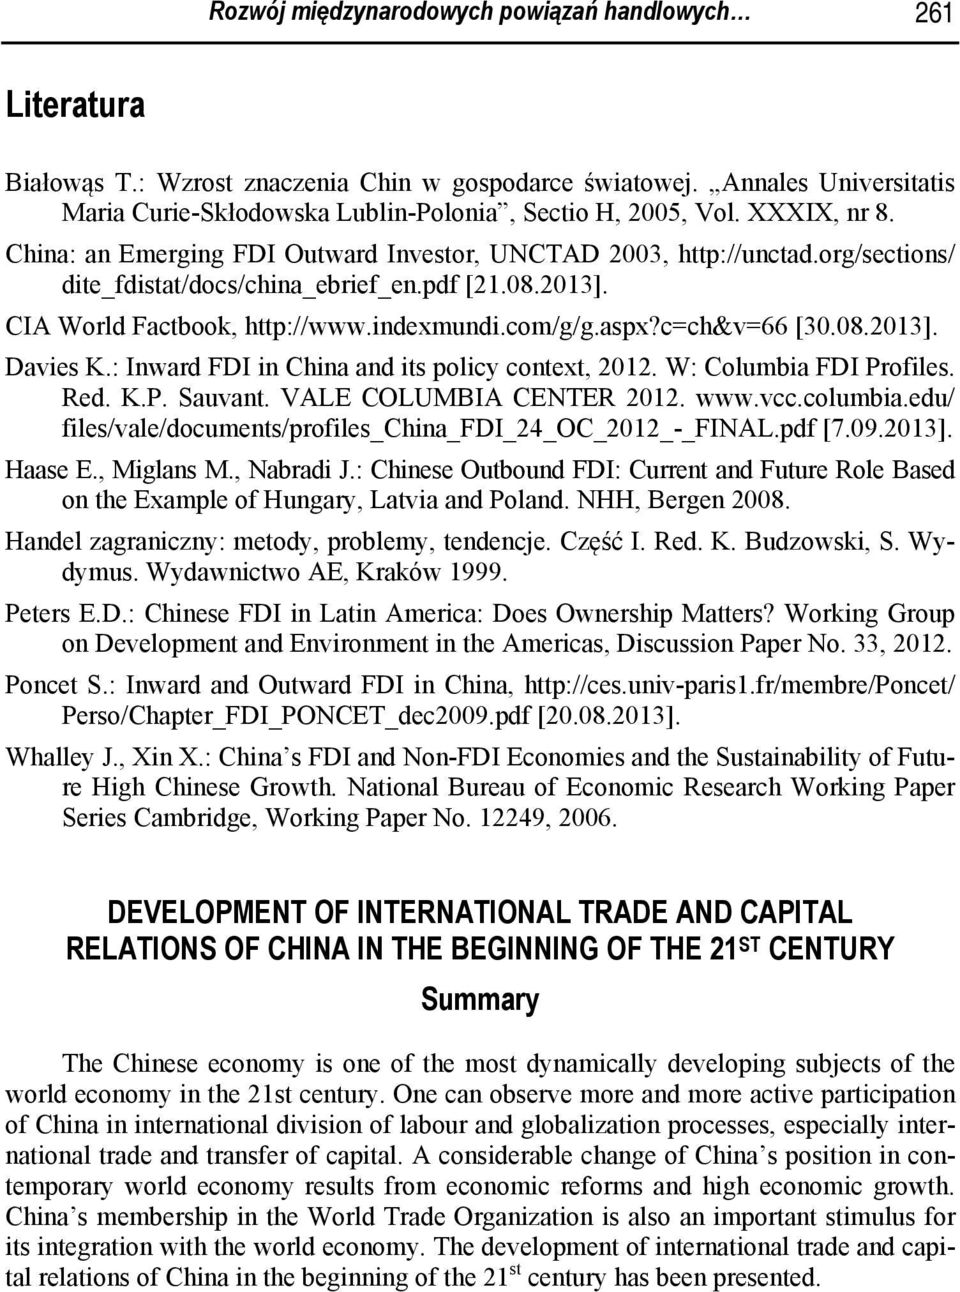 aspx?c=ch&v=66 [30.08.2013]. Davies K.: Inward FDI in China and its policy context, 2012. W: Columbia FDI Profiles. Red. K.P. Sauvant. VALE COLUMBIA CENTER 2012. www.vcc.columbia.